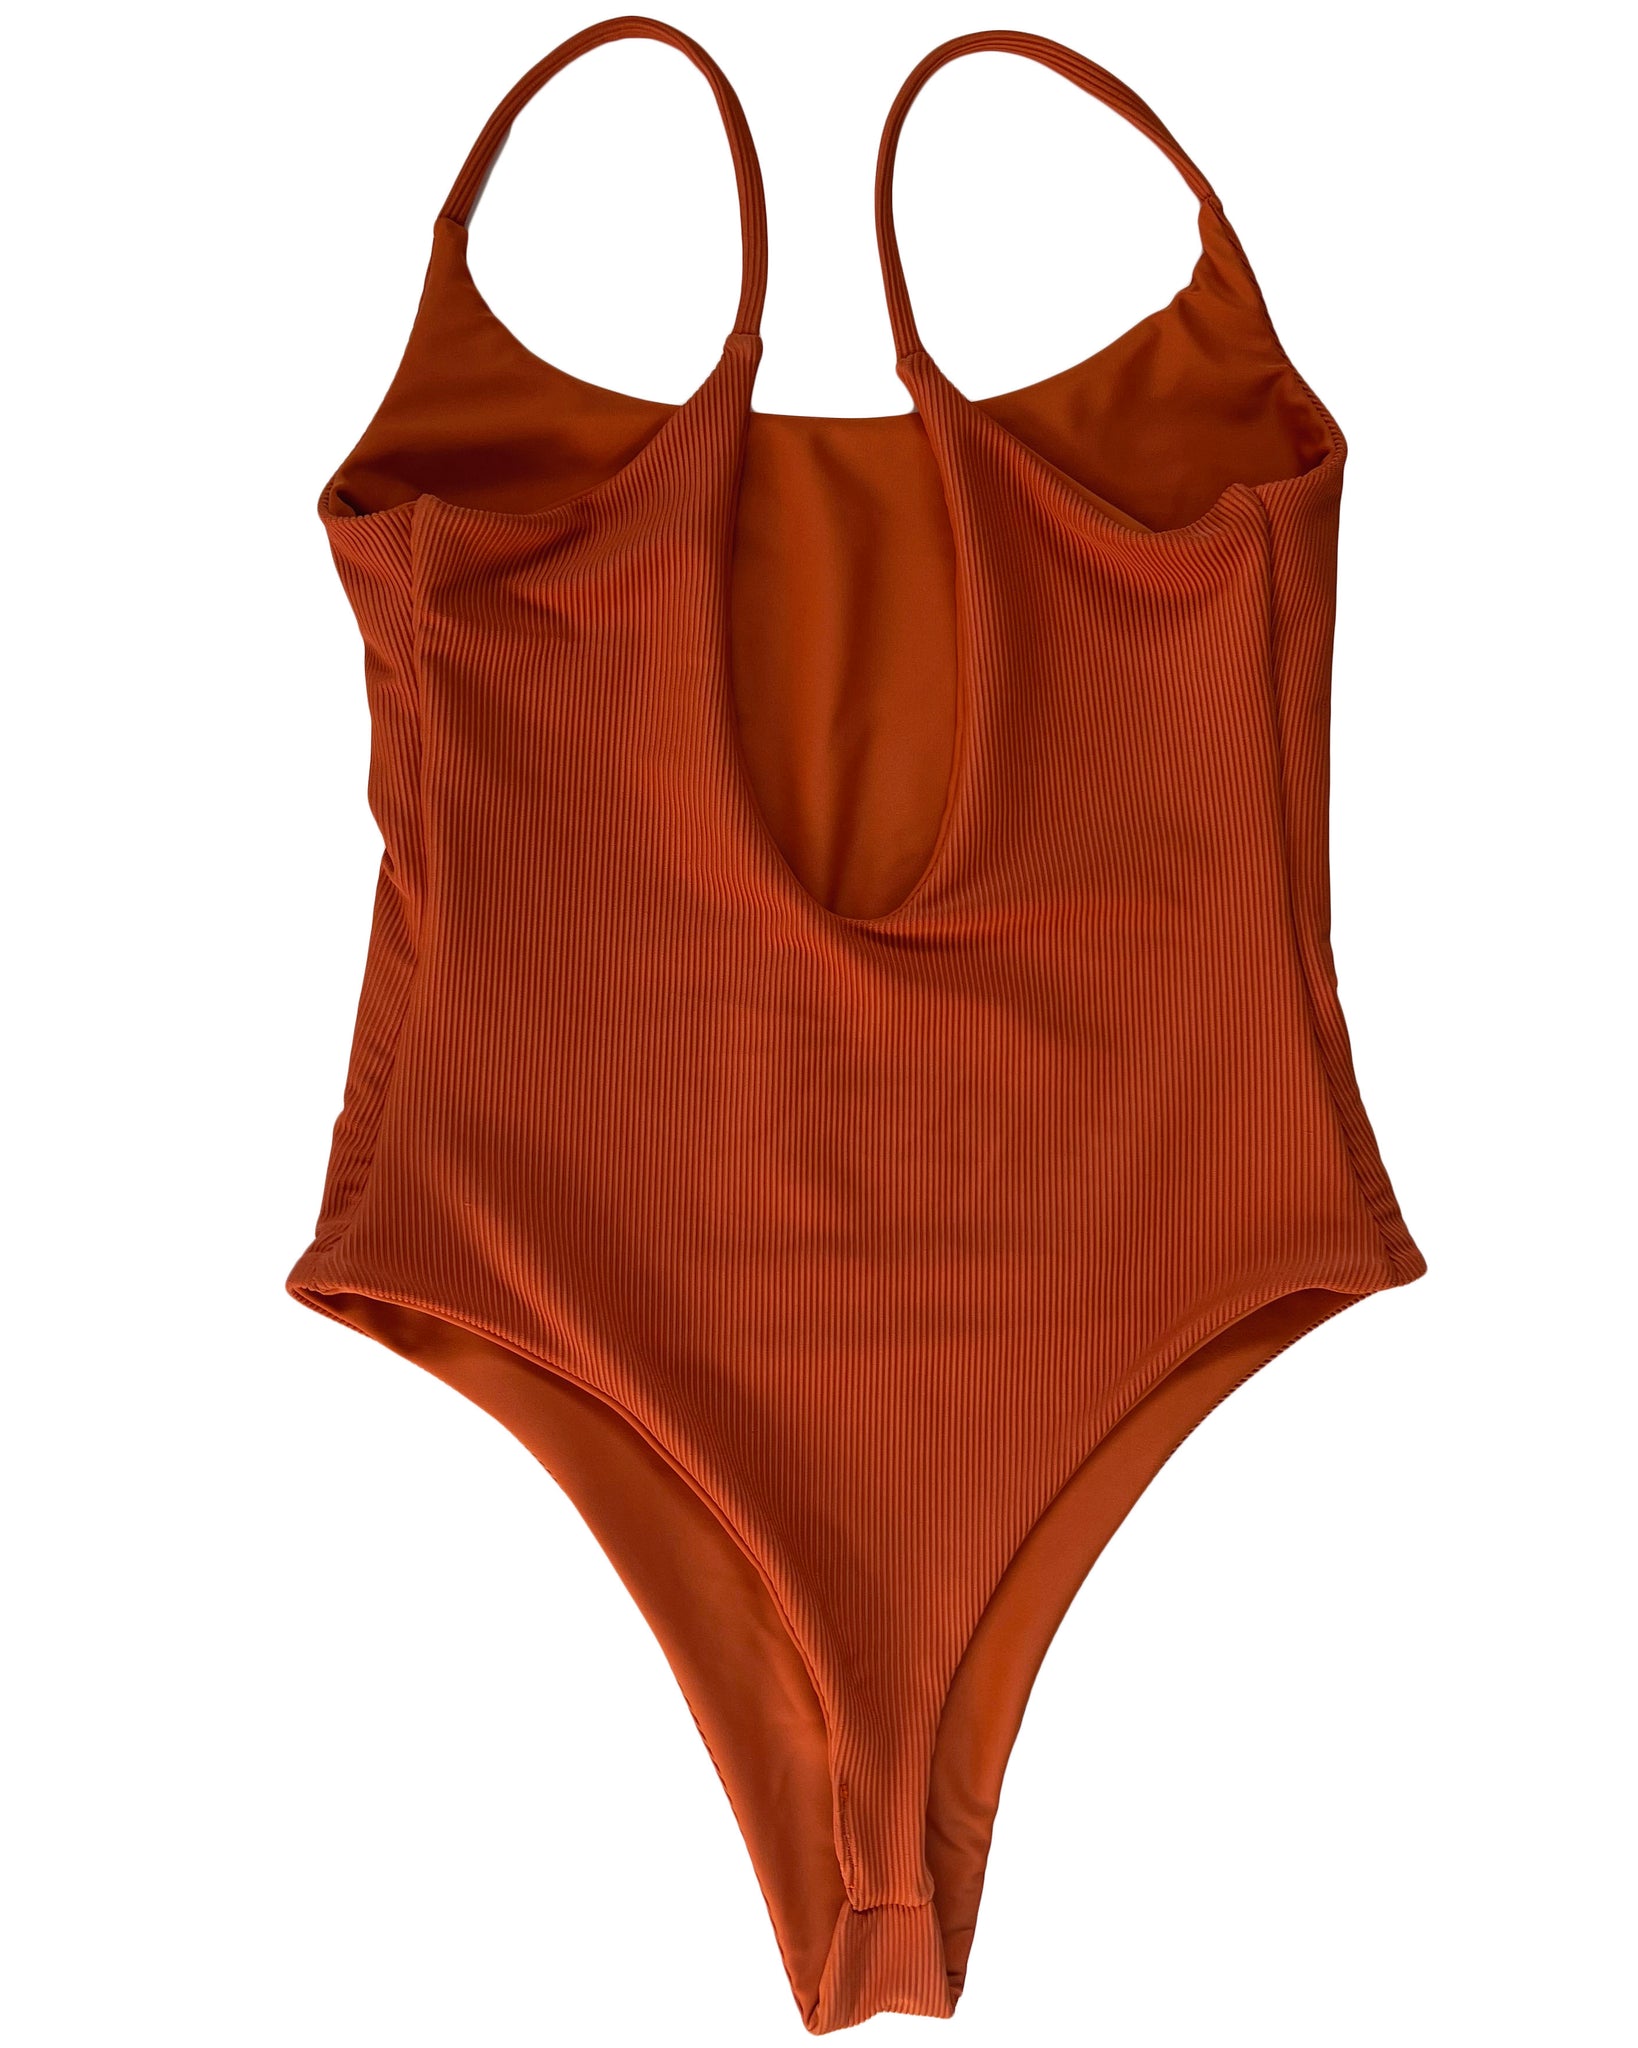 Copper One Piece Swimsuit, Cheeky Monokini, Swimwear, Brazilian